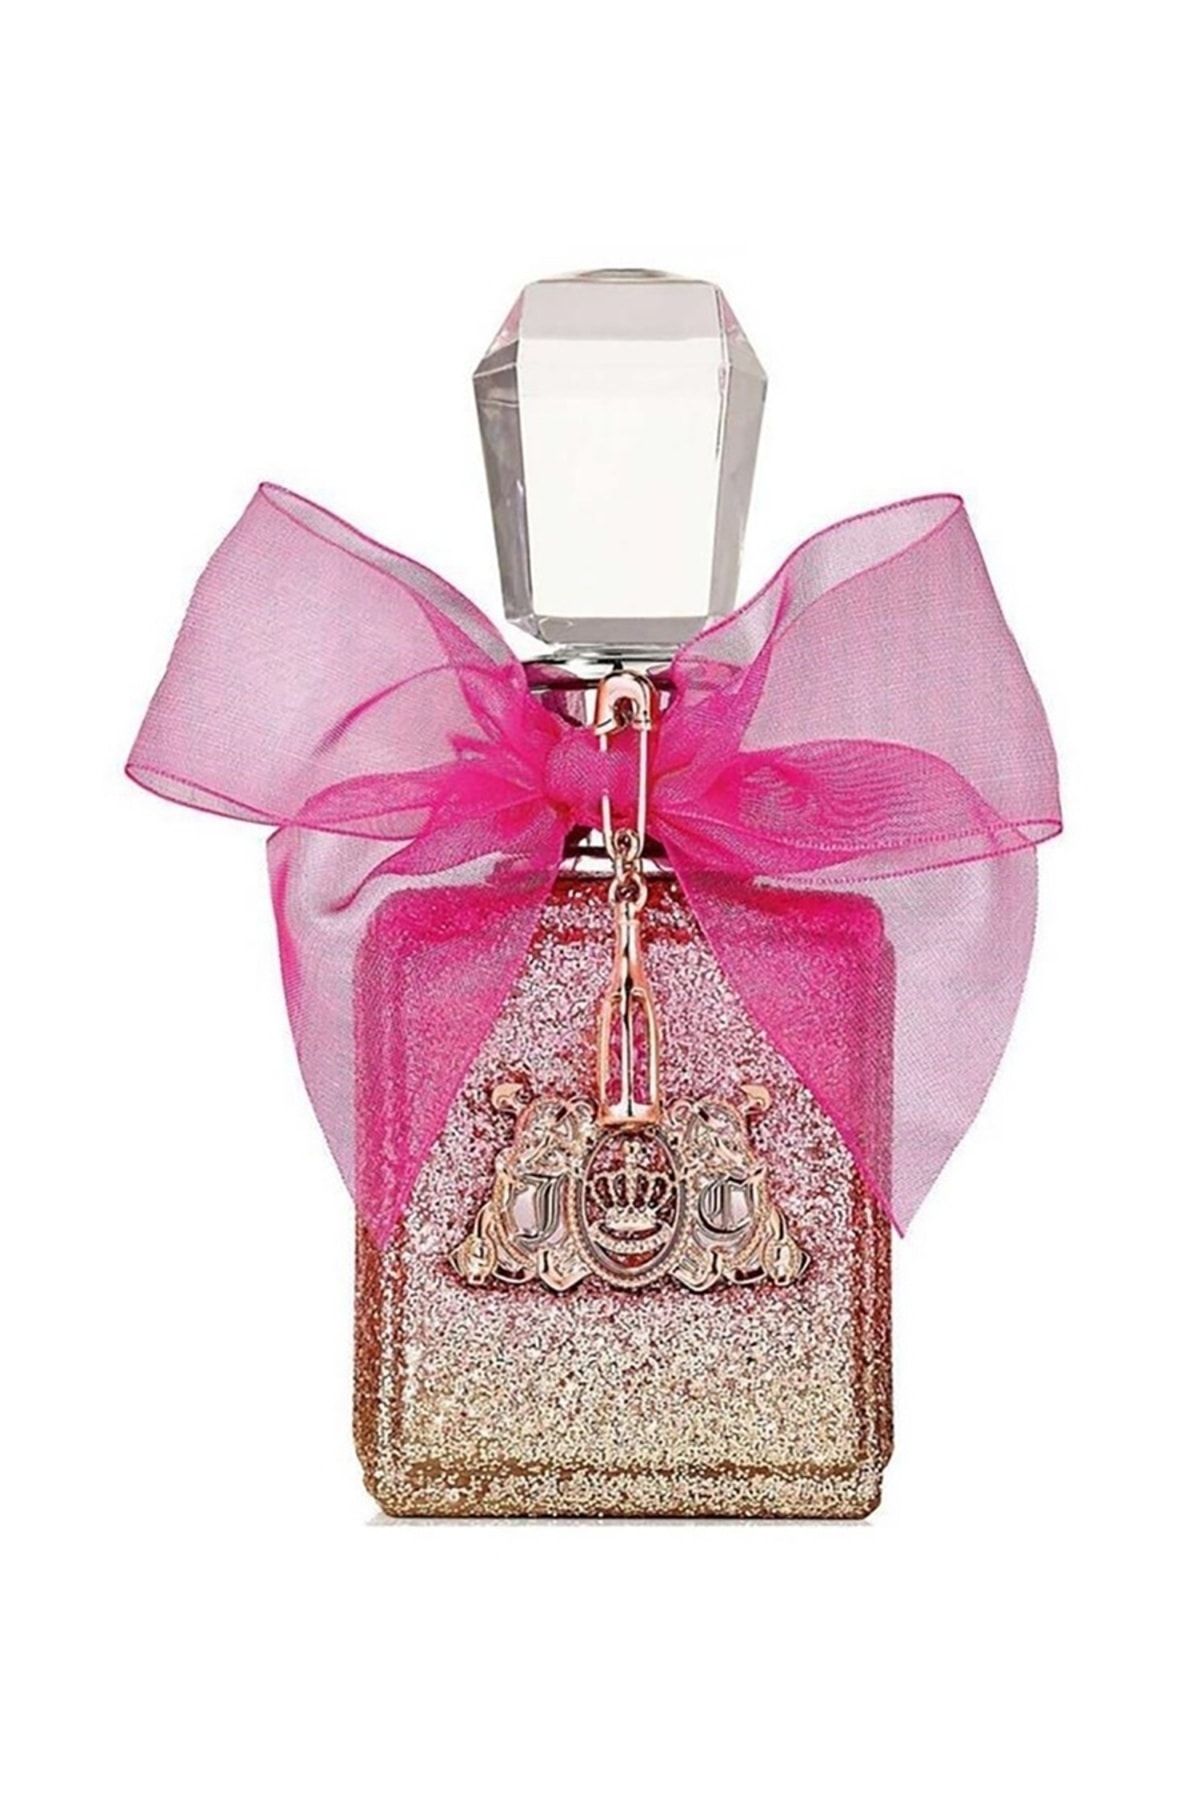 Juicy Couture JUİCY COUTURE VIVA LA ROSE EDP SPRAY LİLİAL FREE PERFUME 100 ML KEYON681